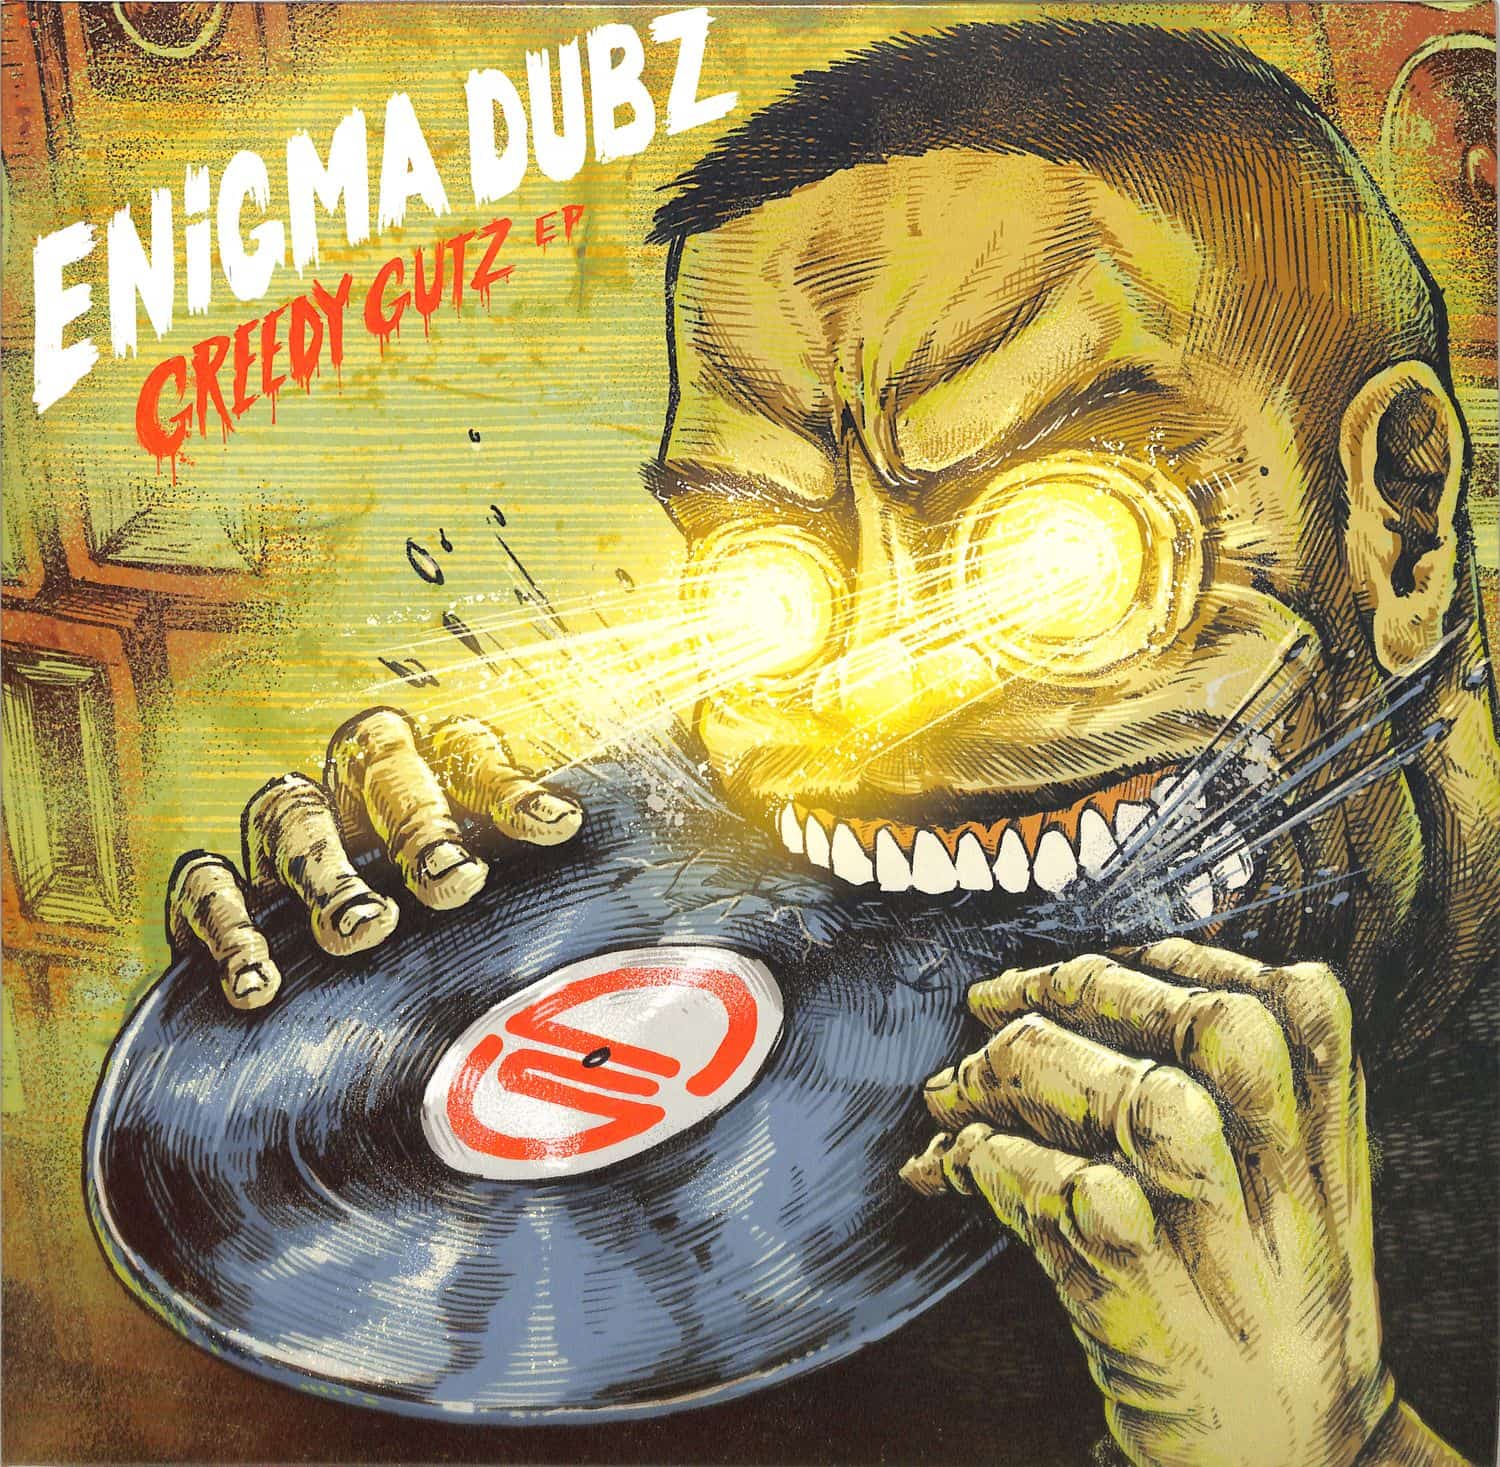 ENiGMA Dubz - GREEDY GUTZ EP